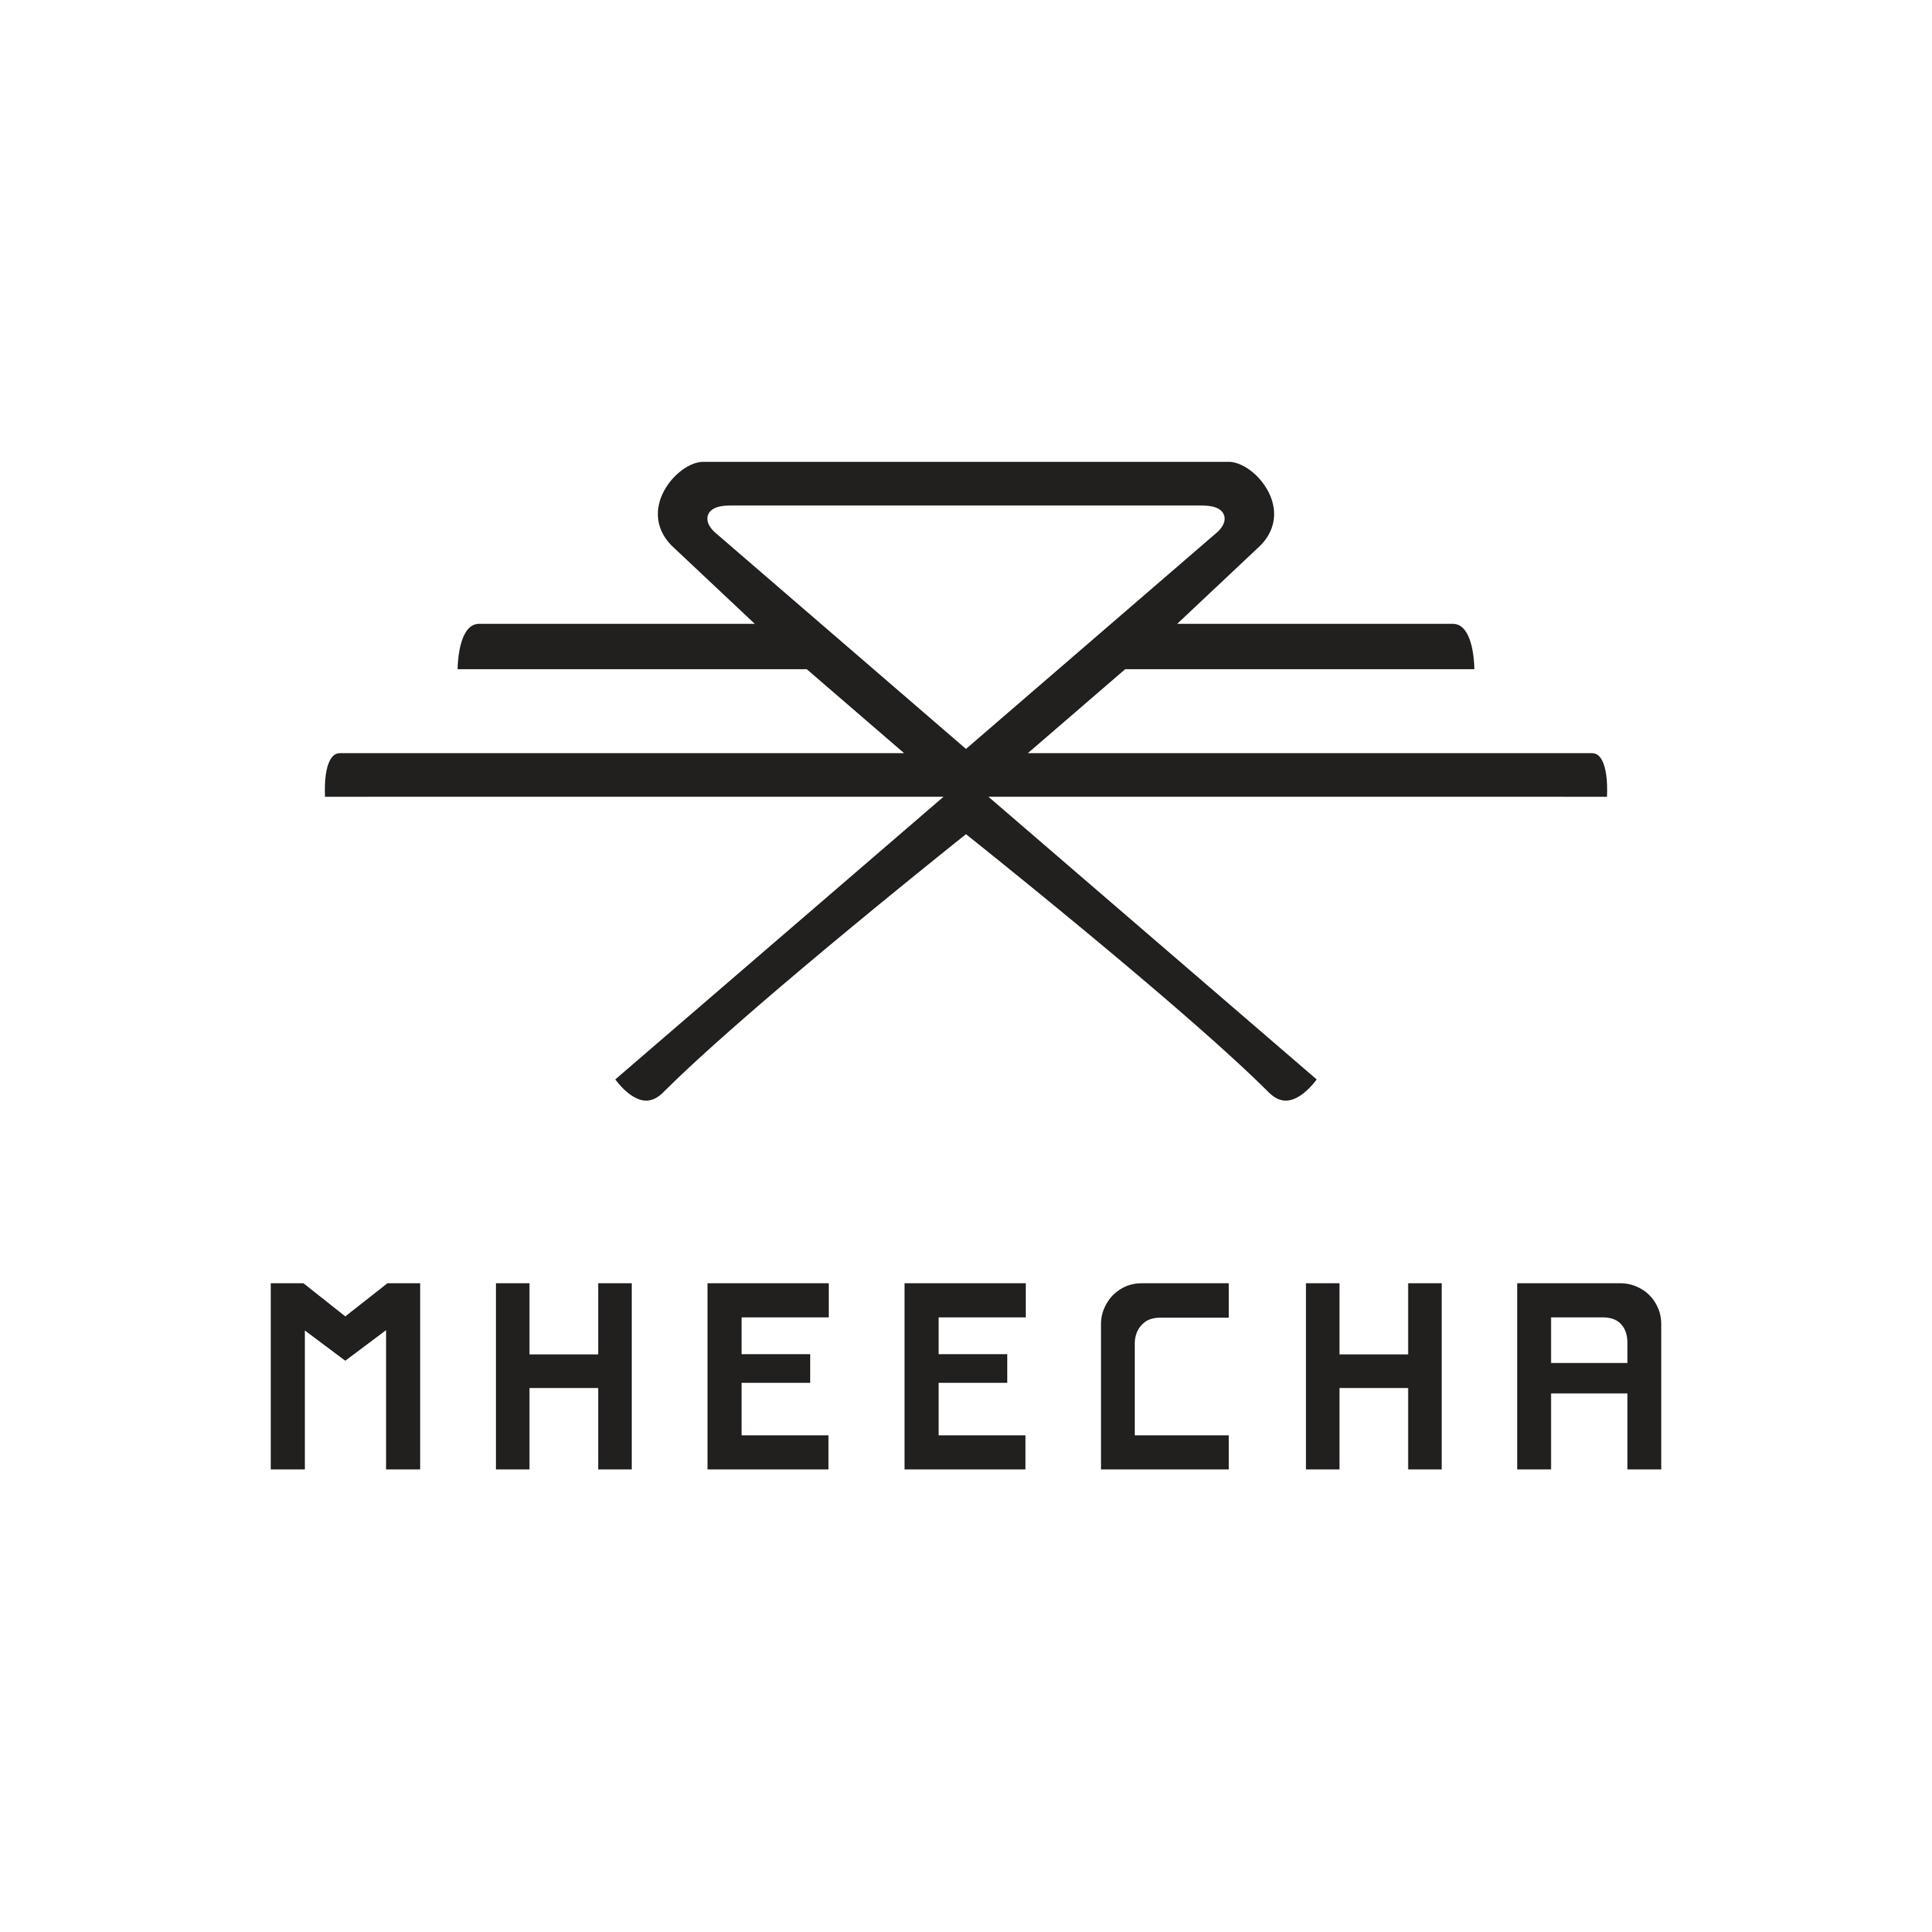 Mheecha Design Pvt Ltd